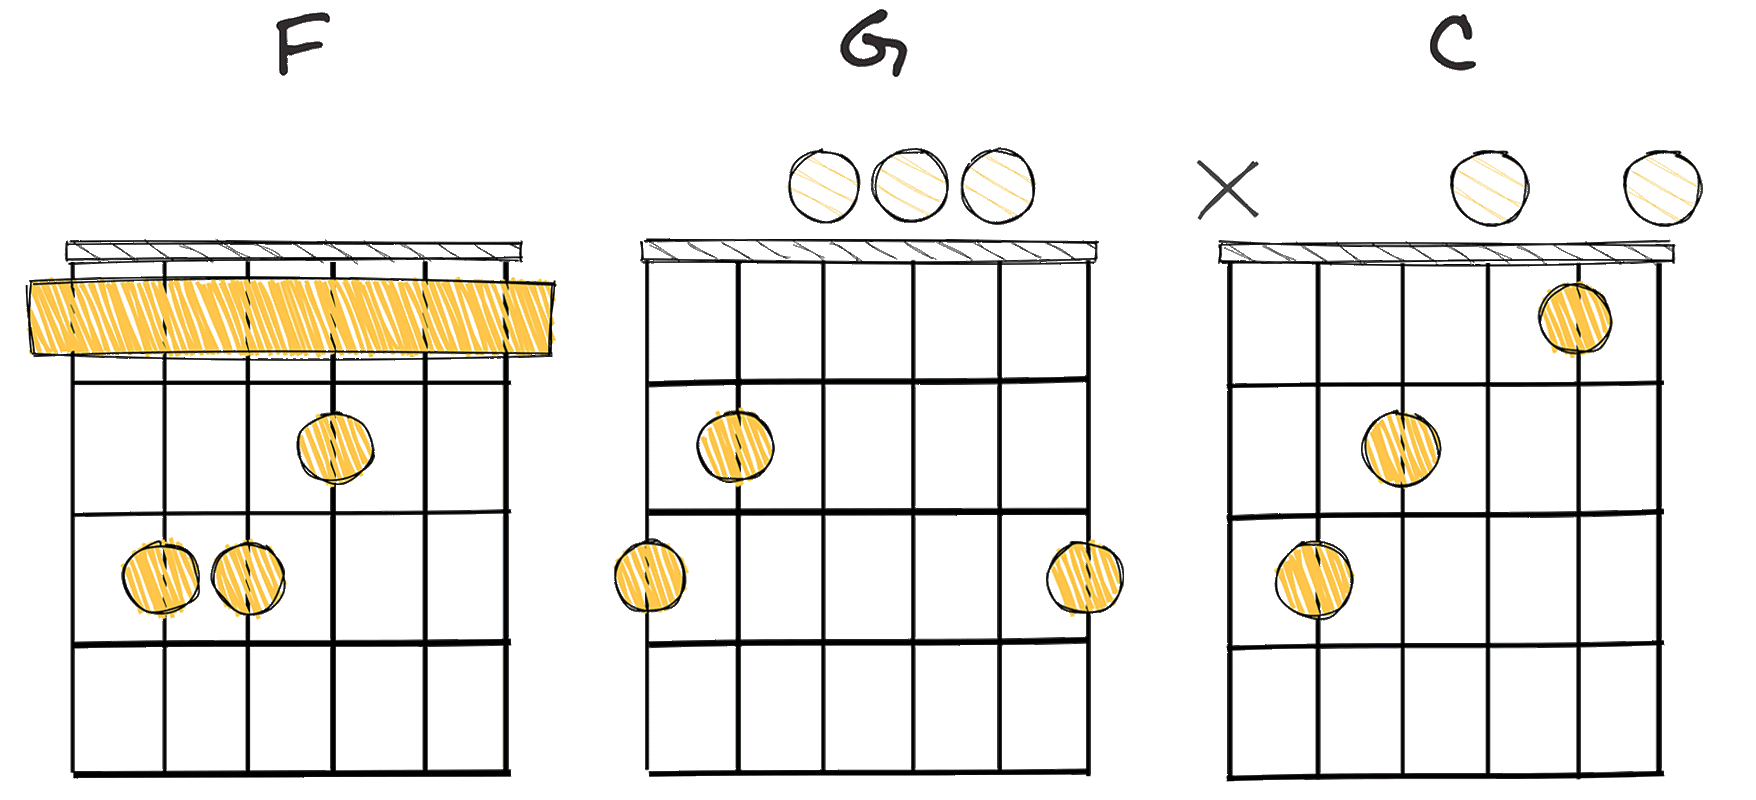 IV - V - I (4-5-1) chords diagram